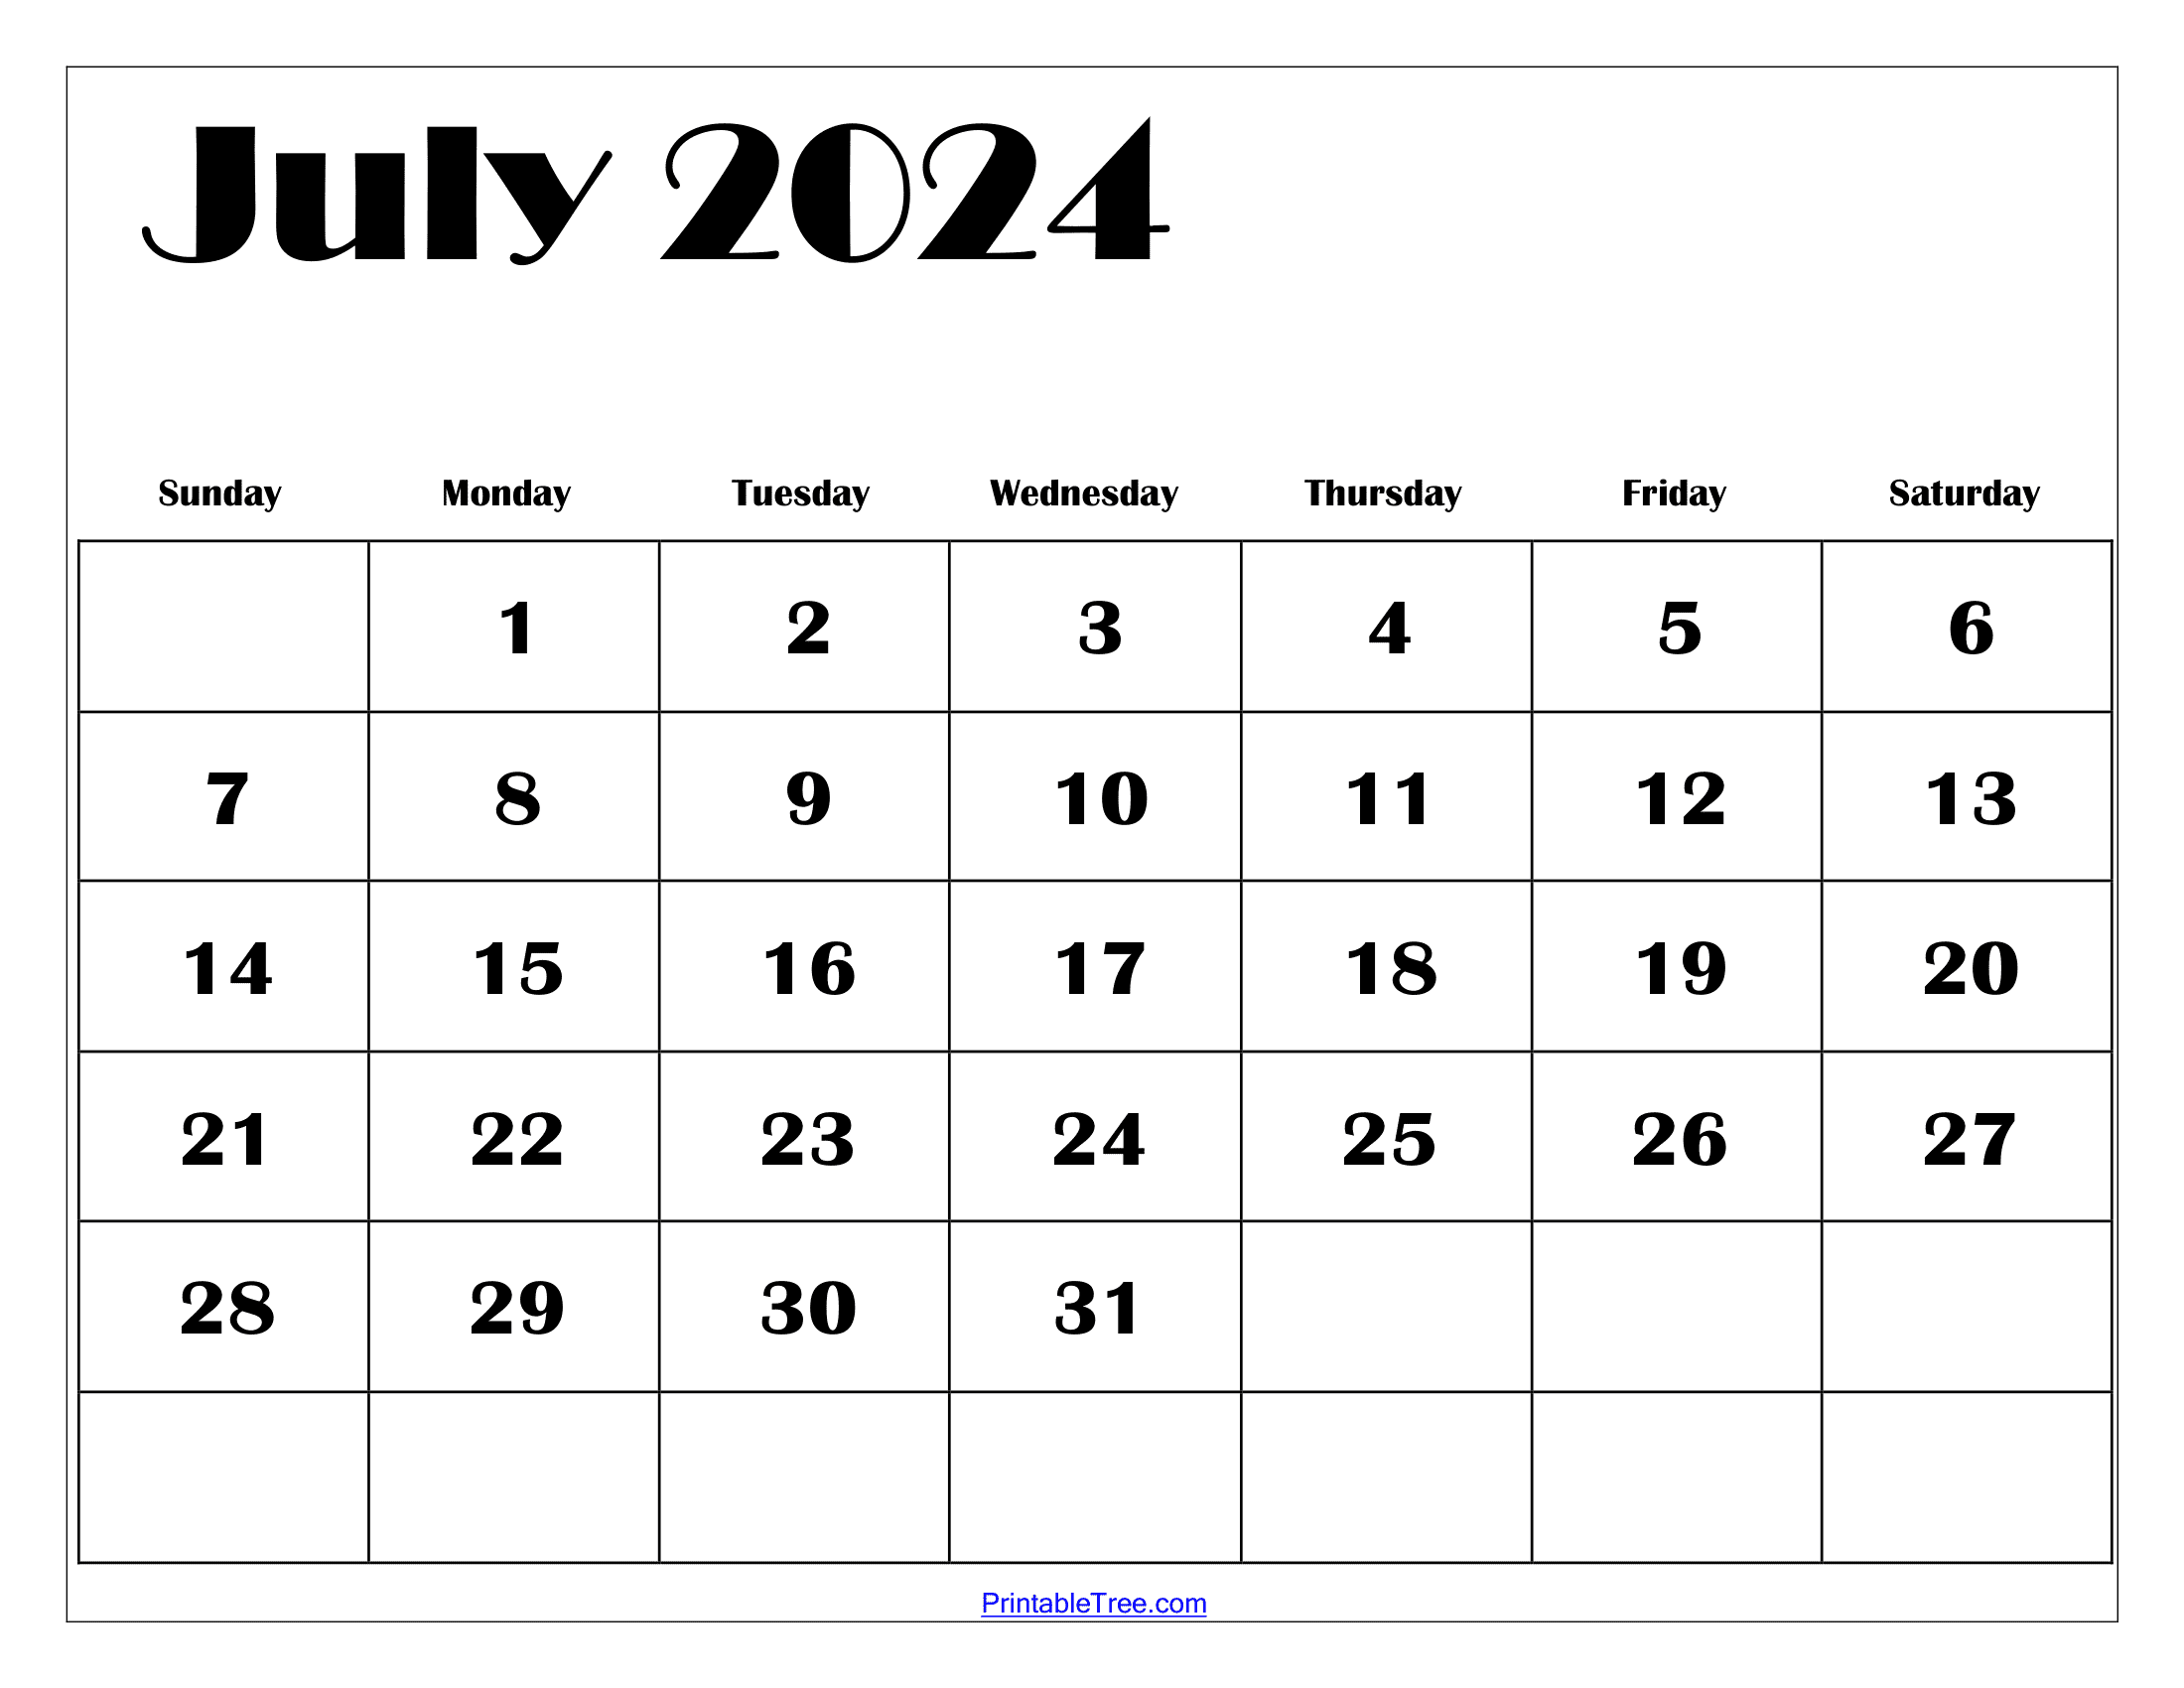 July 2024 Calendar Printable Pdf With Holidays Free Template for Free Printable Calendar 2024 July